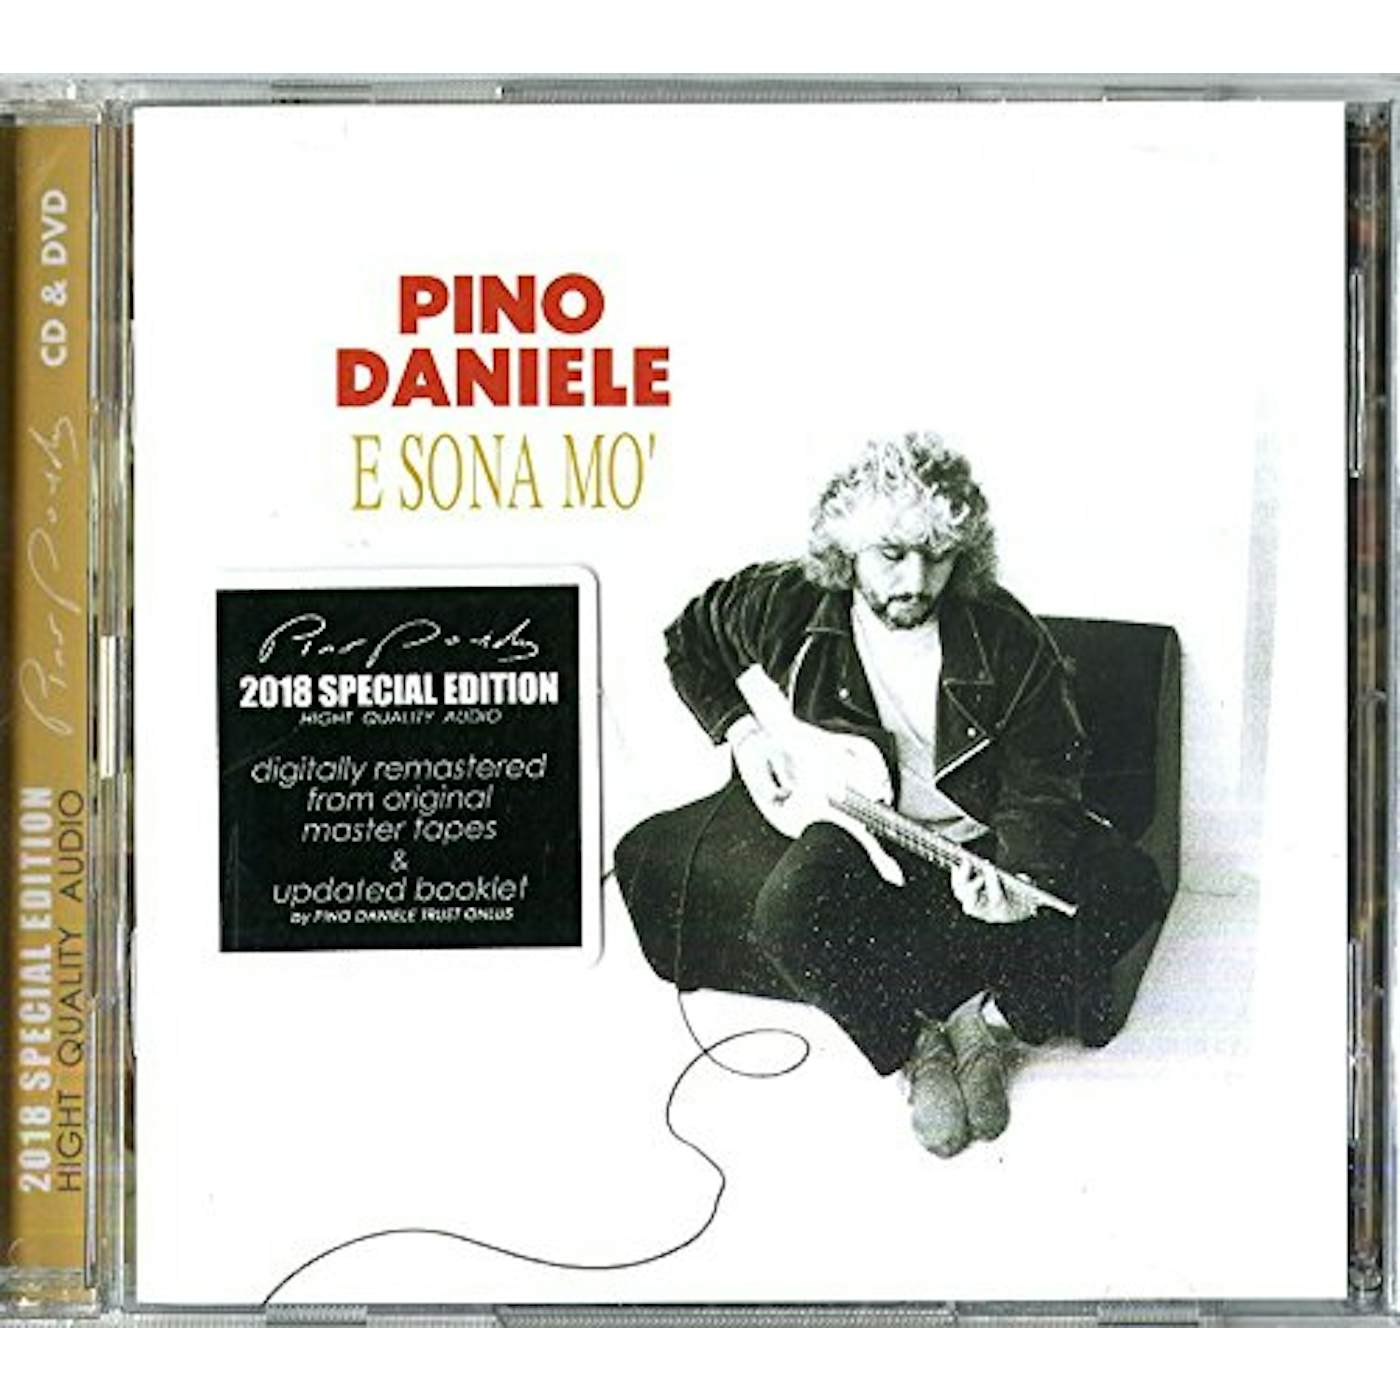 Pino Daniele E SONA MO (LIVE) CD